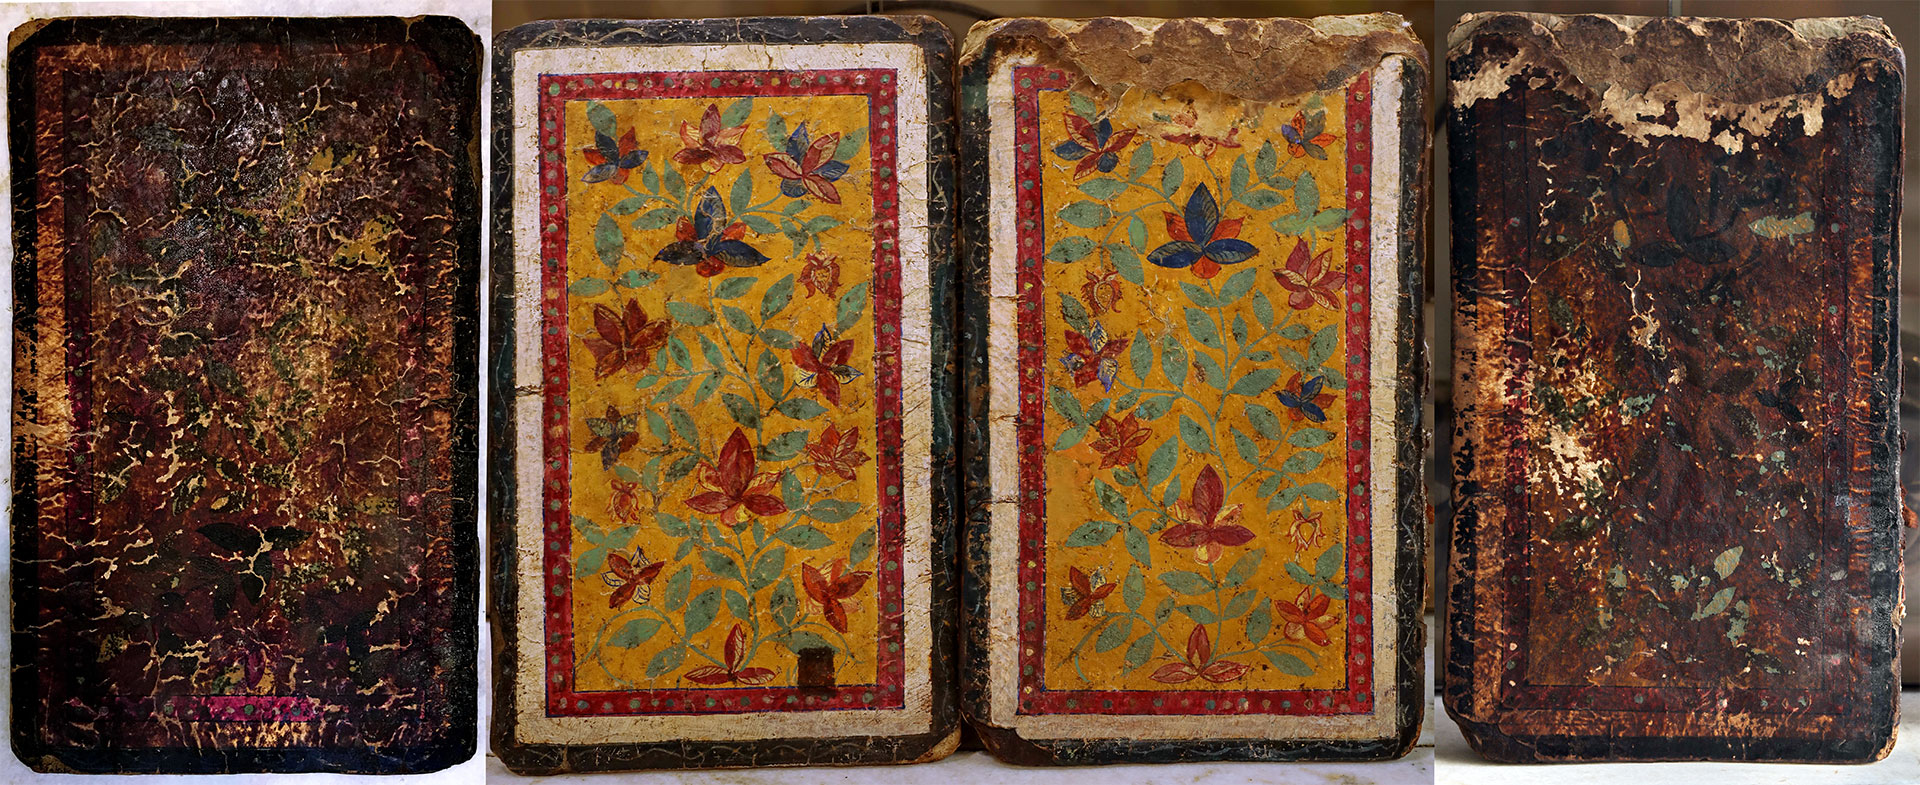 Mitra Etezadi: Old Quran Cover restoration process